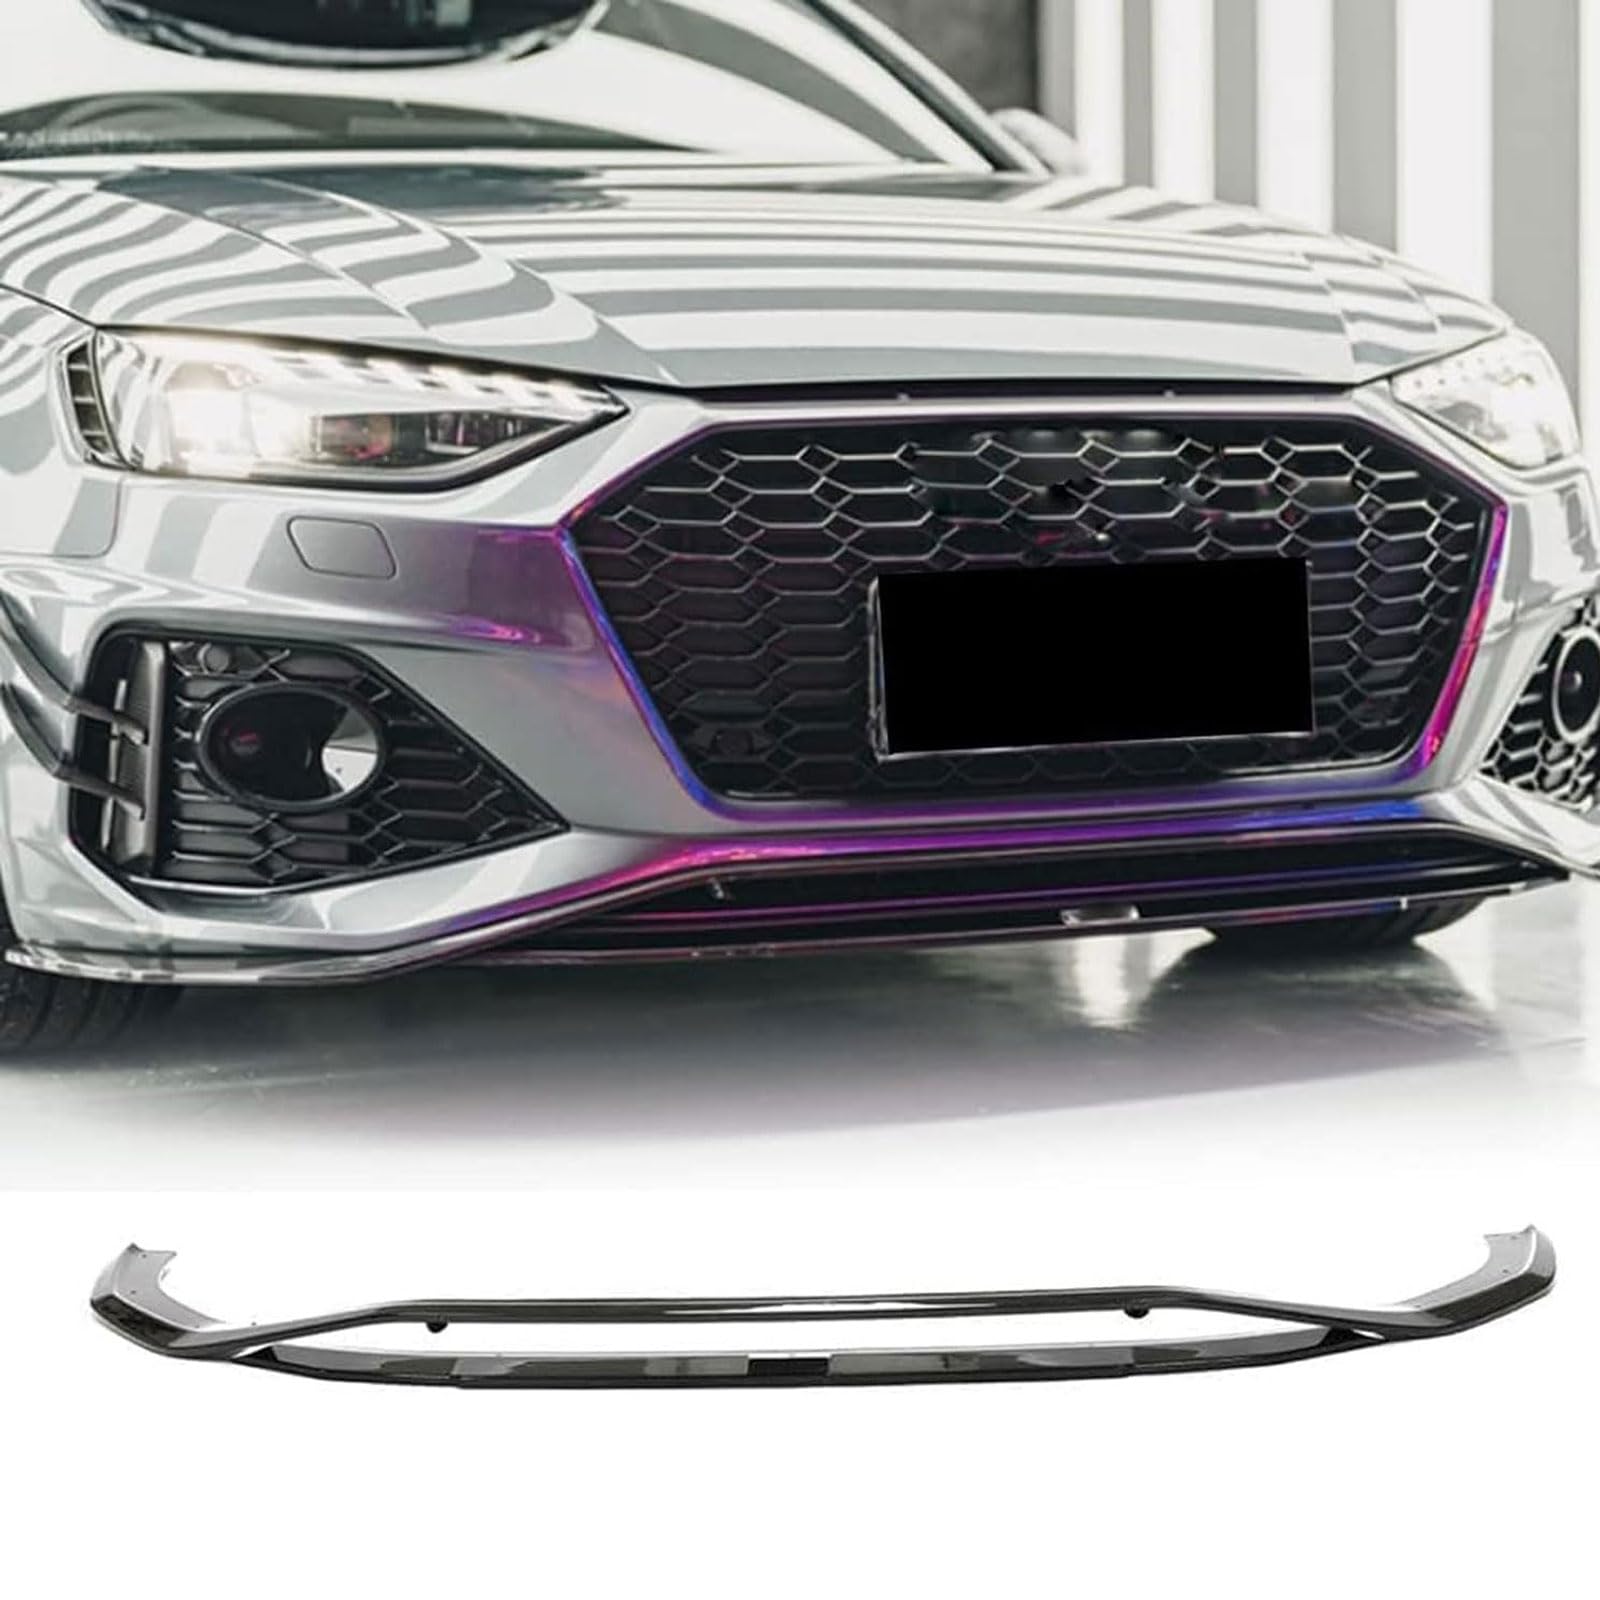 Auto Frontspoiler für Audi RS4 B9 Avant 2020 2021, Frontstoßstange Lippe Spoiler Splitter, Frontspoiler Diffusor Body Kit Auto Tuning Zubehör von WSCDMCC